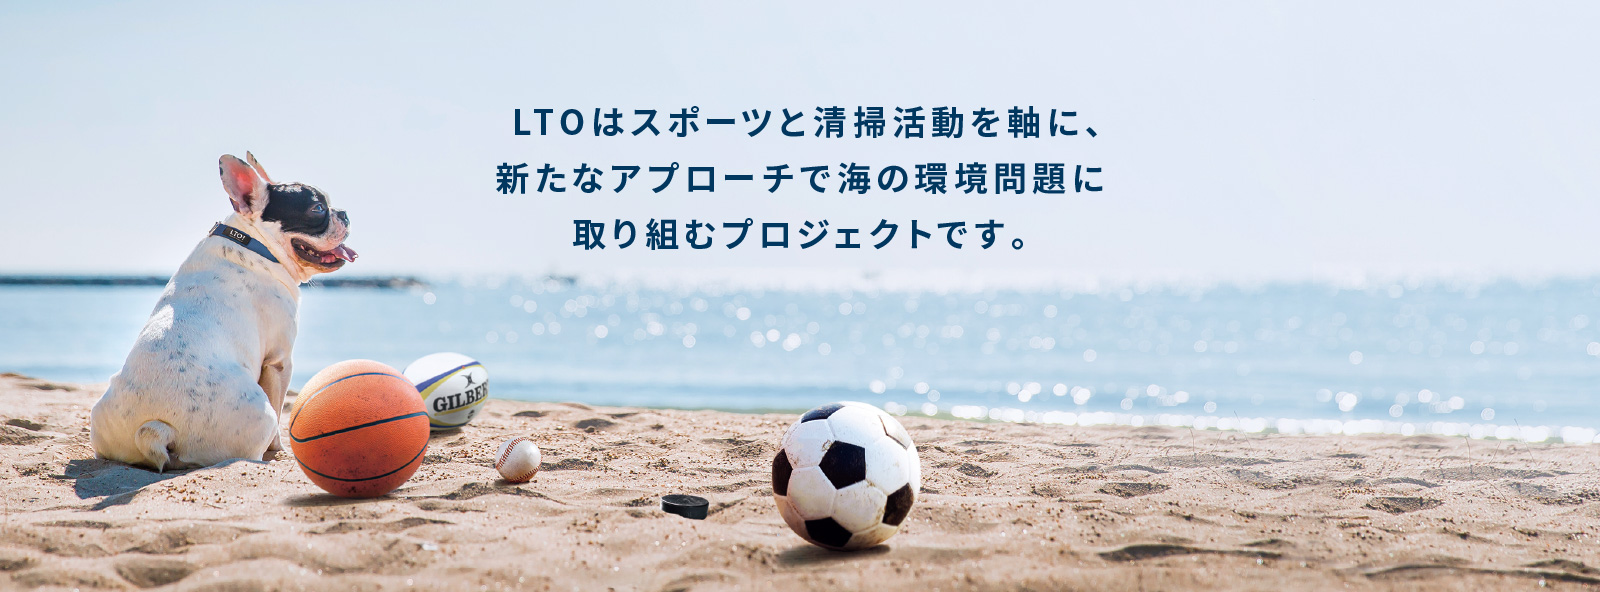 LTOはスポーツと清掃活動を軸に、新たなアプローチで海の環境問題に取り組むプロジェクト。